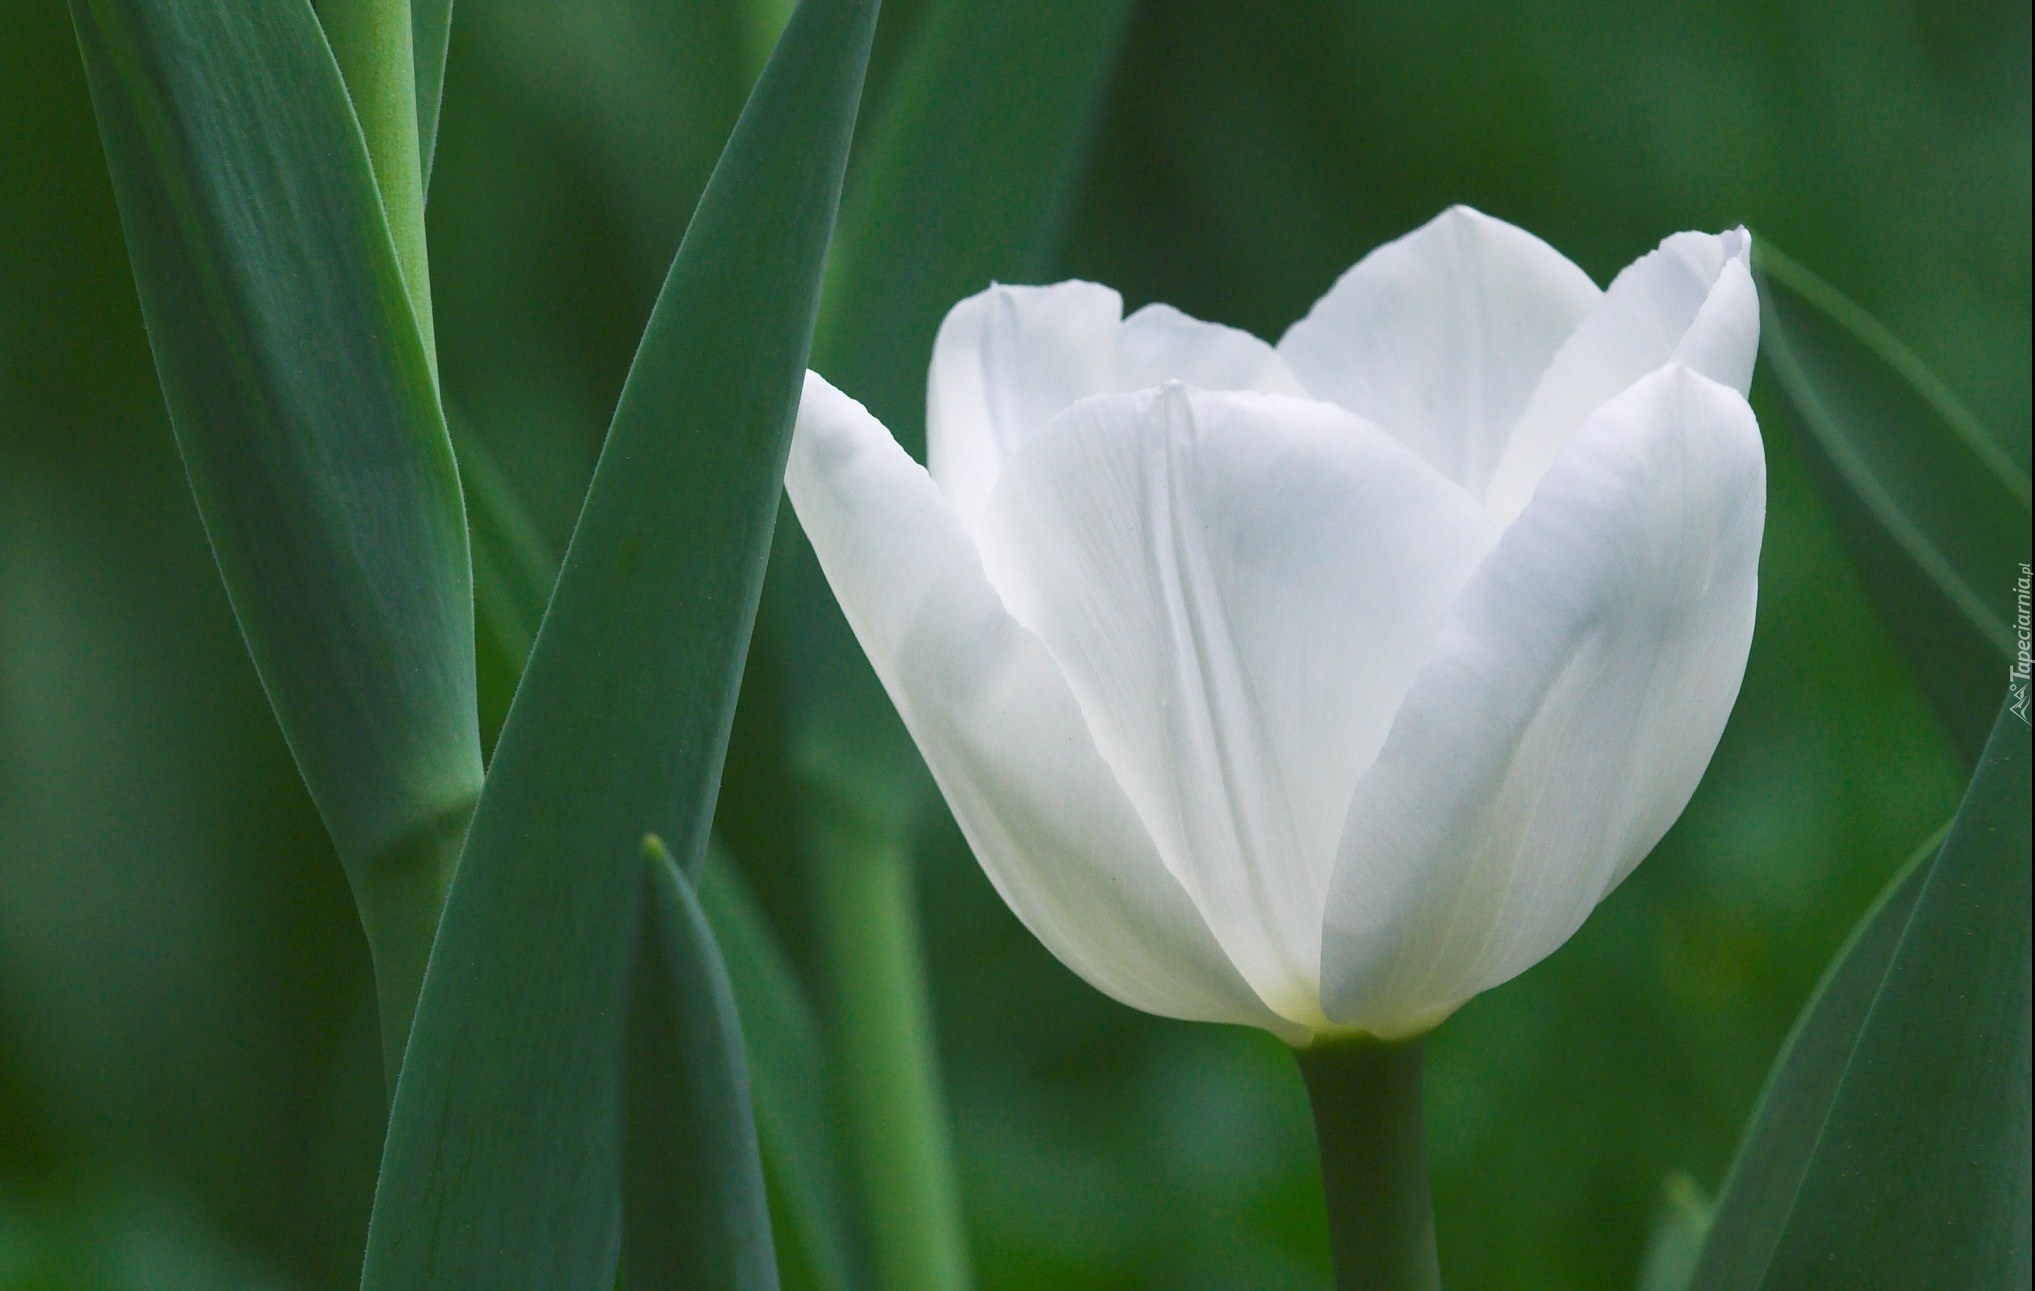 Kwiat, Tulipan, Biały